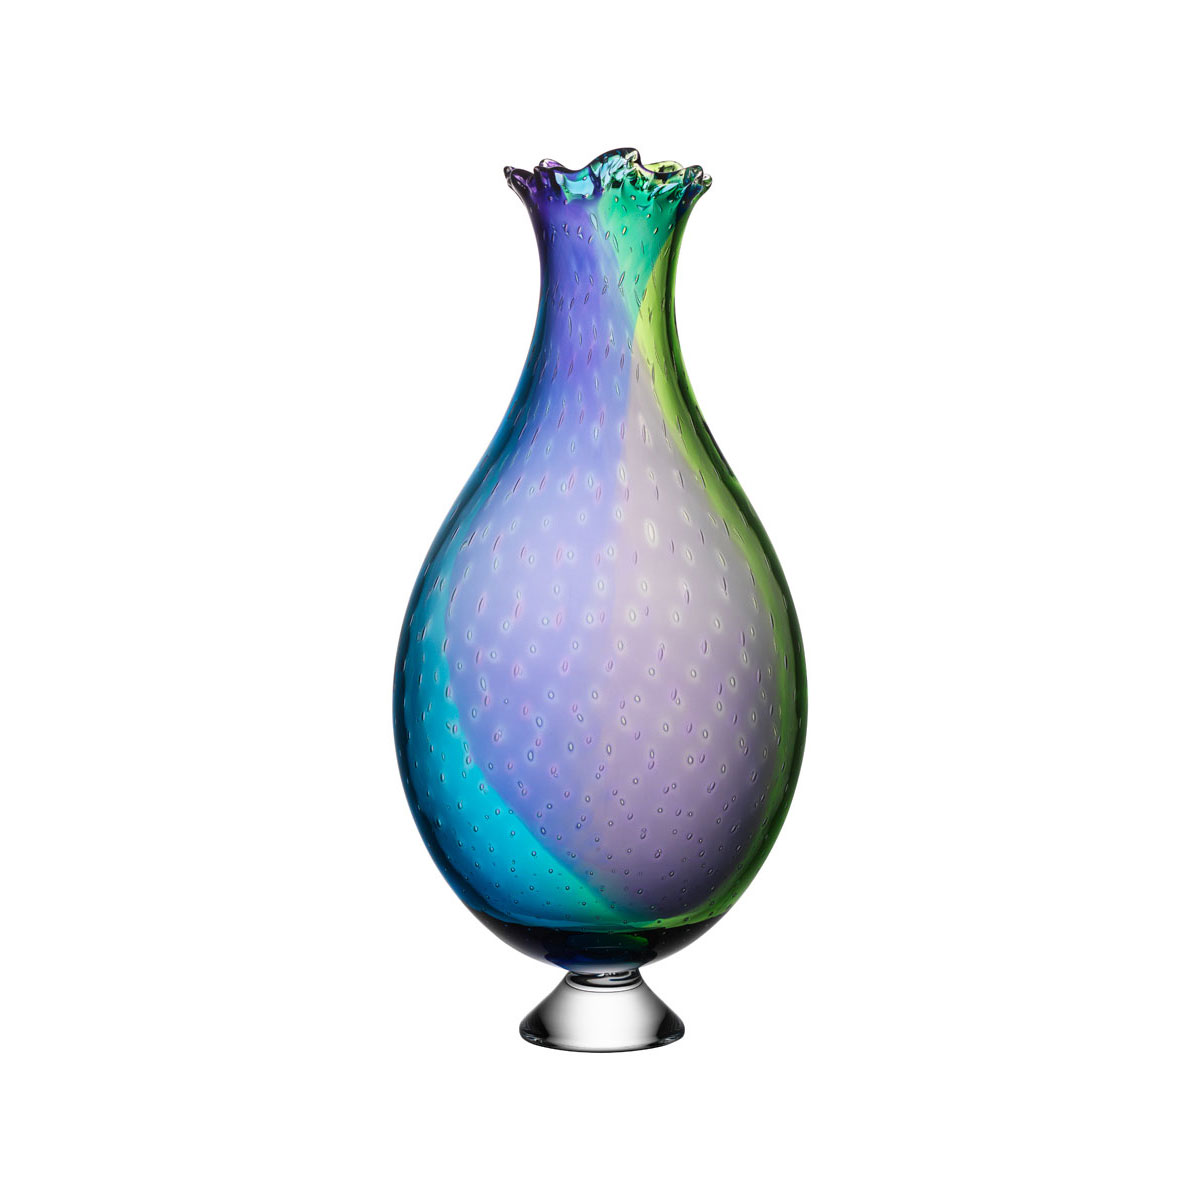 Kosta Boda Vases and Bowls | Crystal Classics